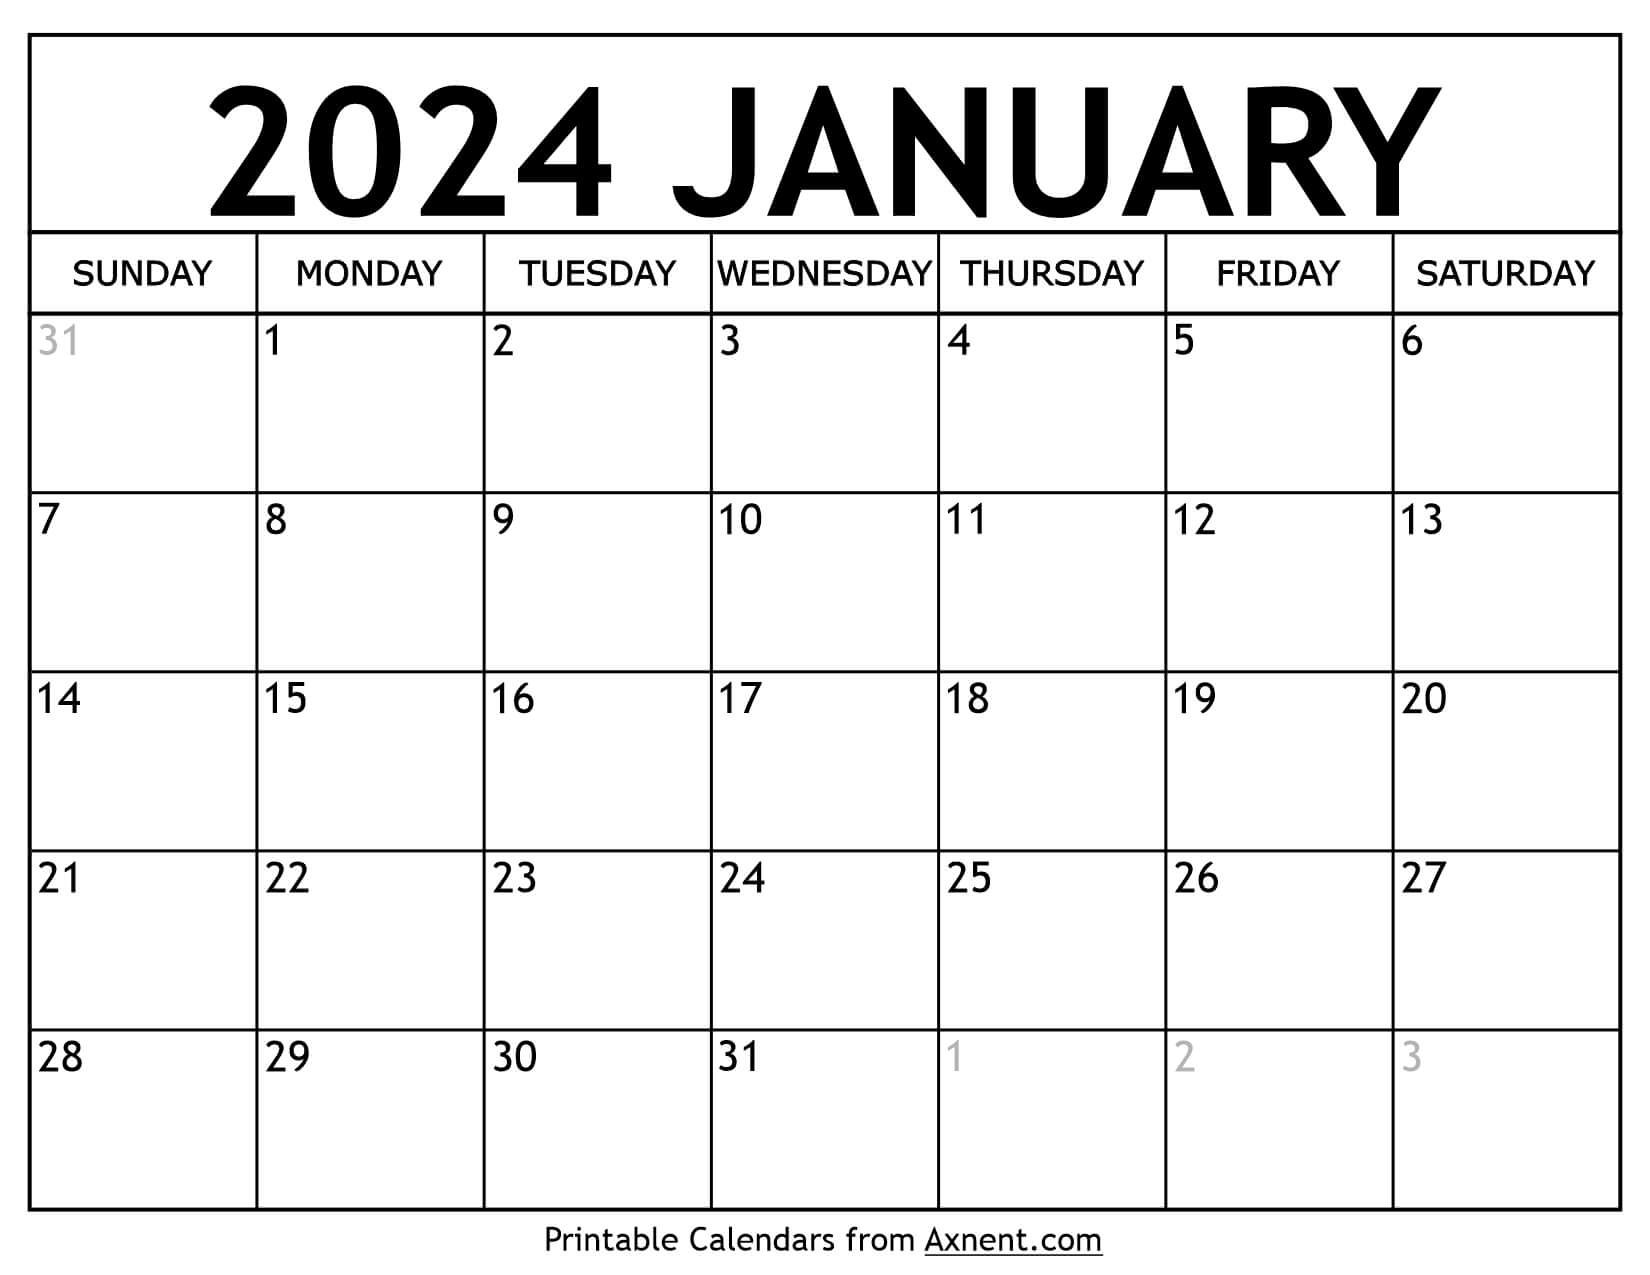 Printable January 2024 Calendar Template - Print Now for Blank January 2024 Calendar Printable Free